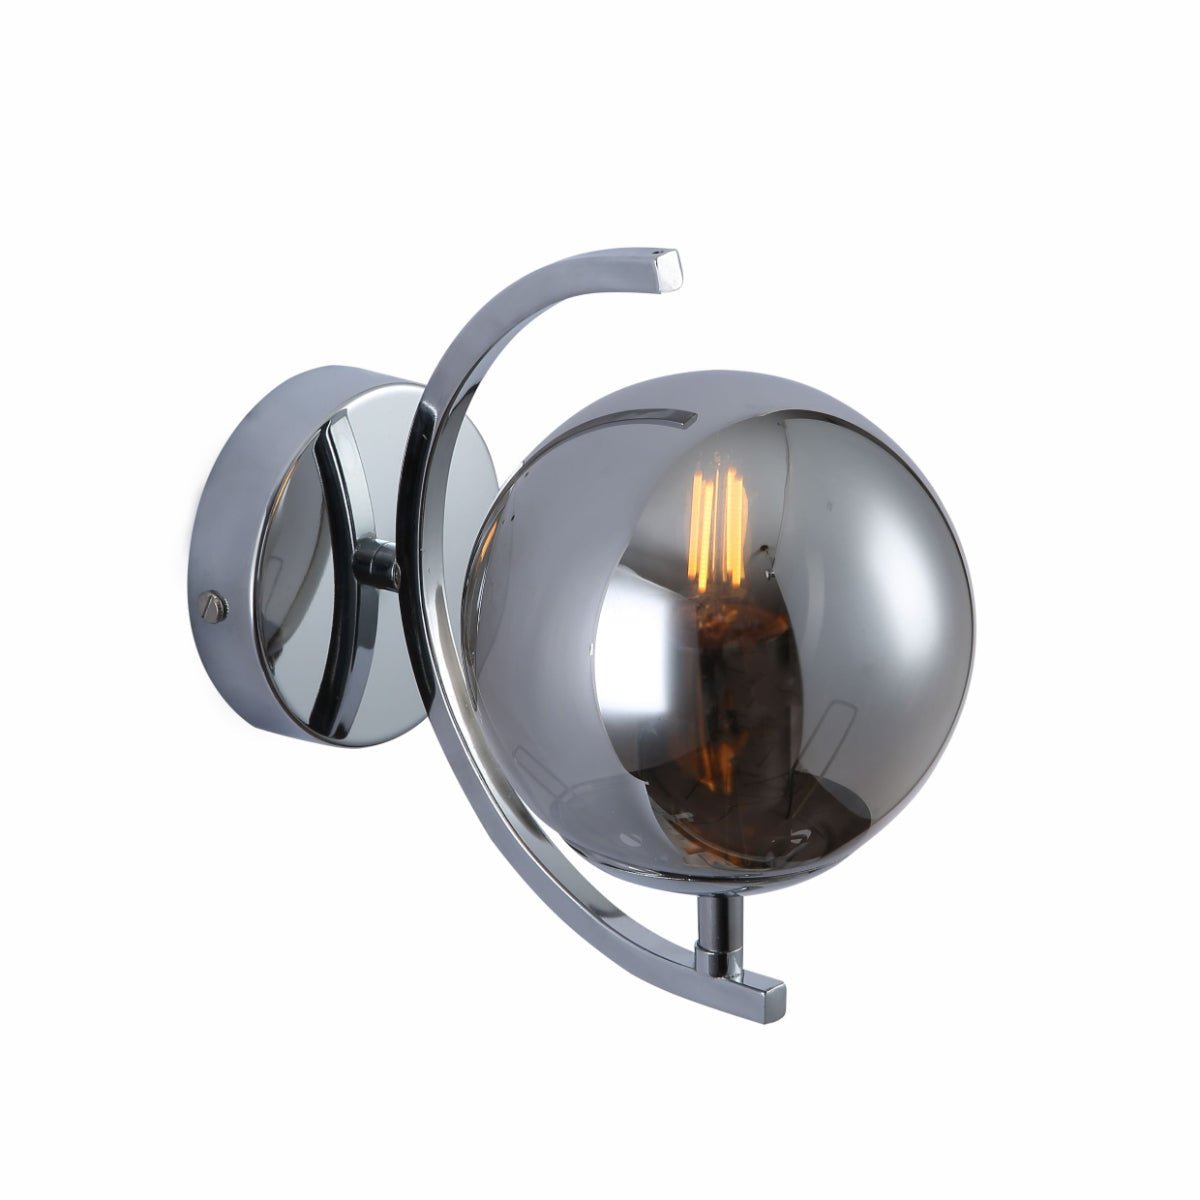 Main image of Smoky Globe Glass Crescent Chrome Metal Modern Wall Light with E27 Fitting | TEKLED 151-19808